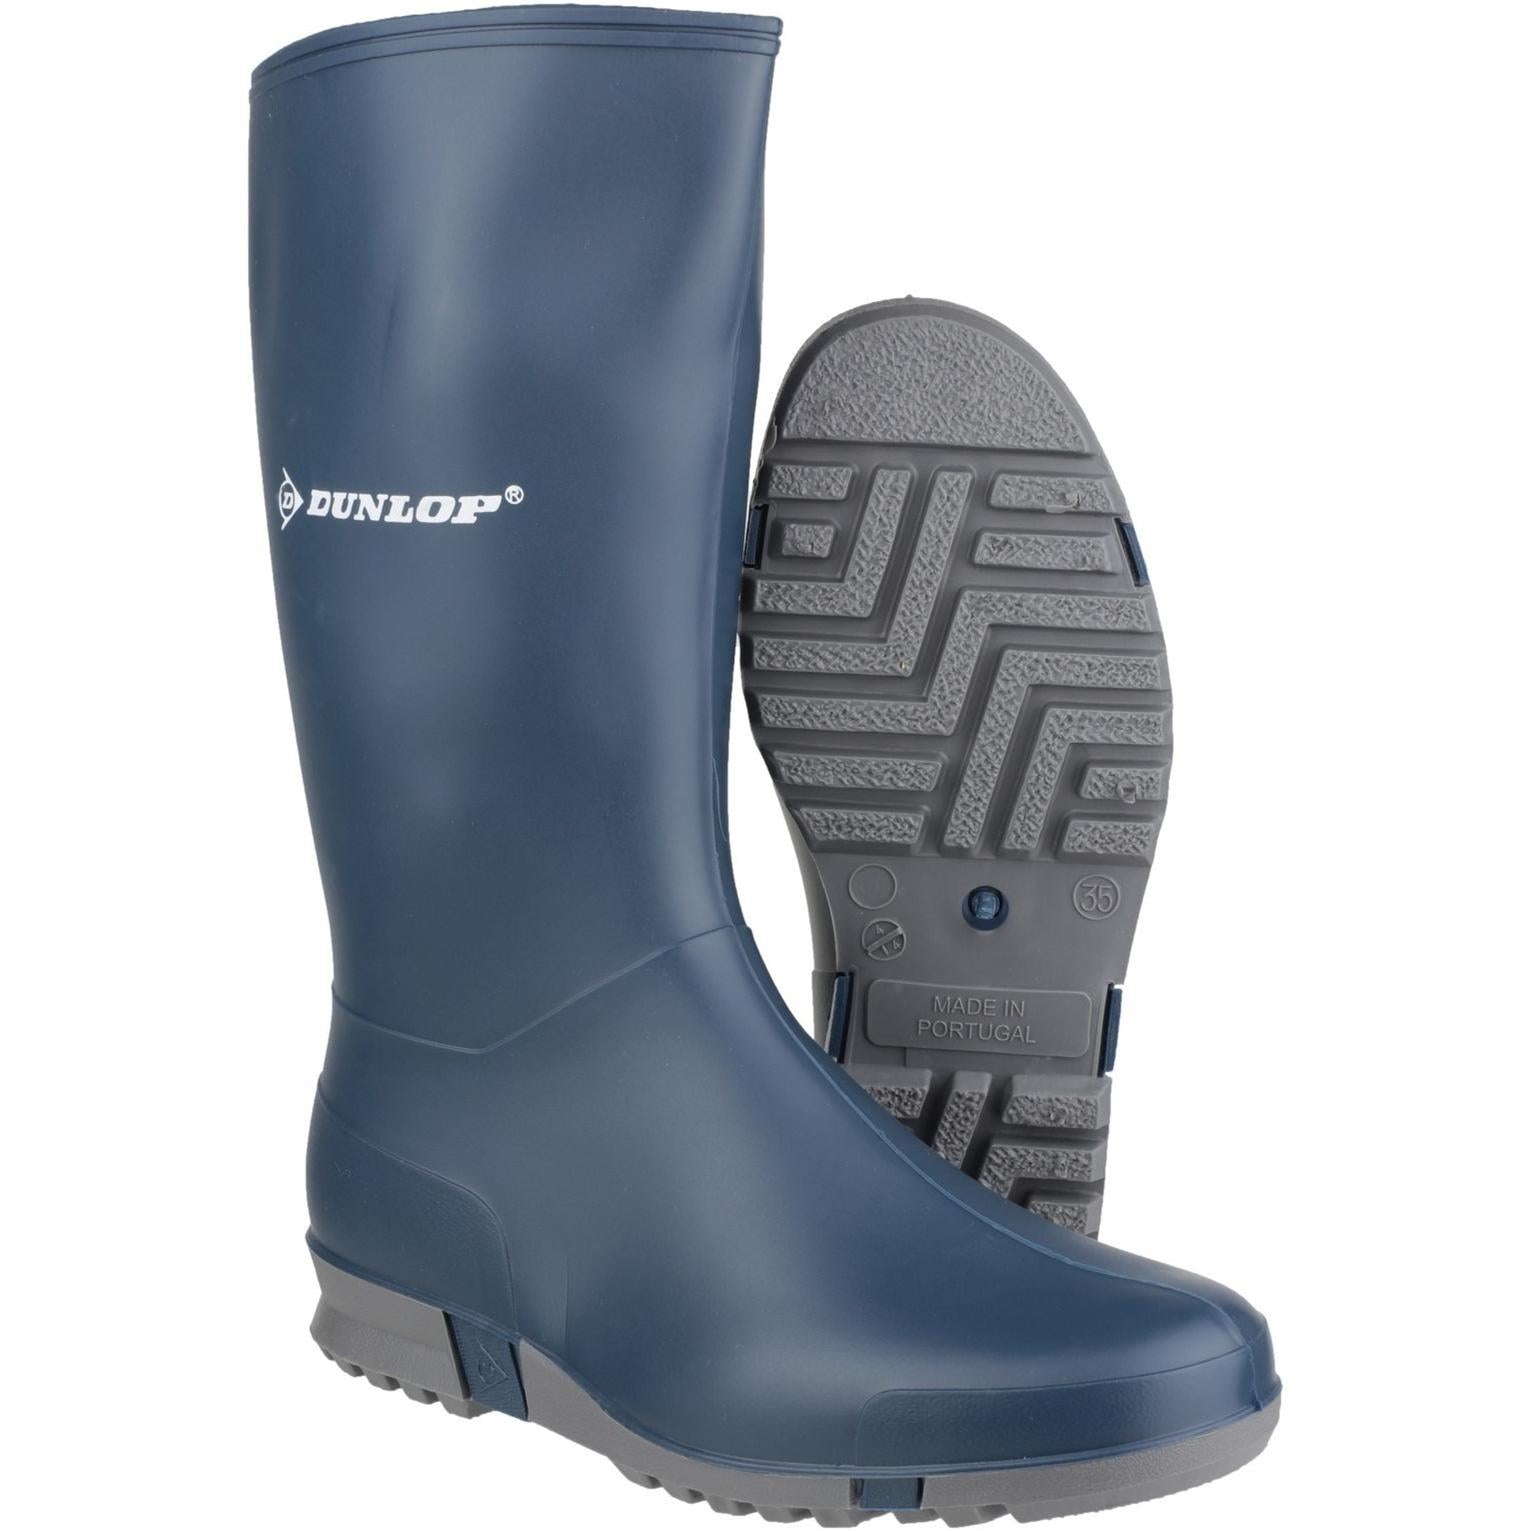 Dunlop Protective Footwear Sport Wellington Boots